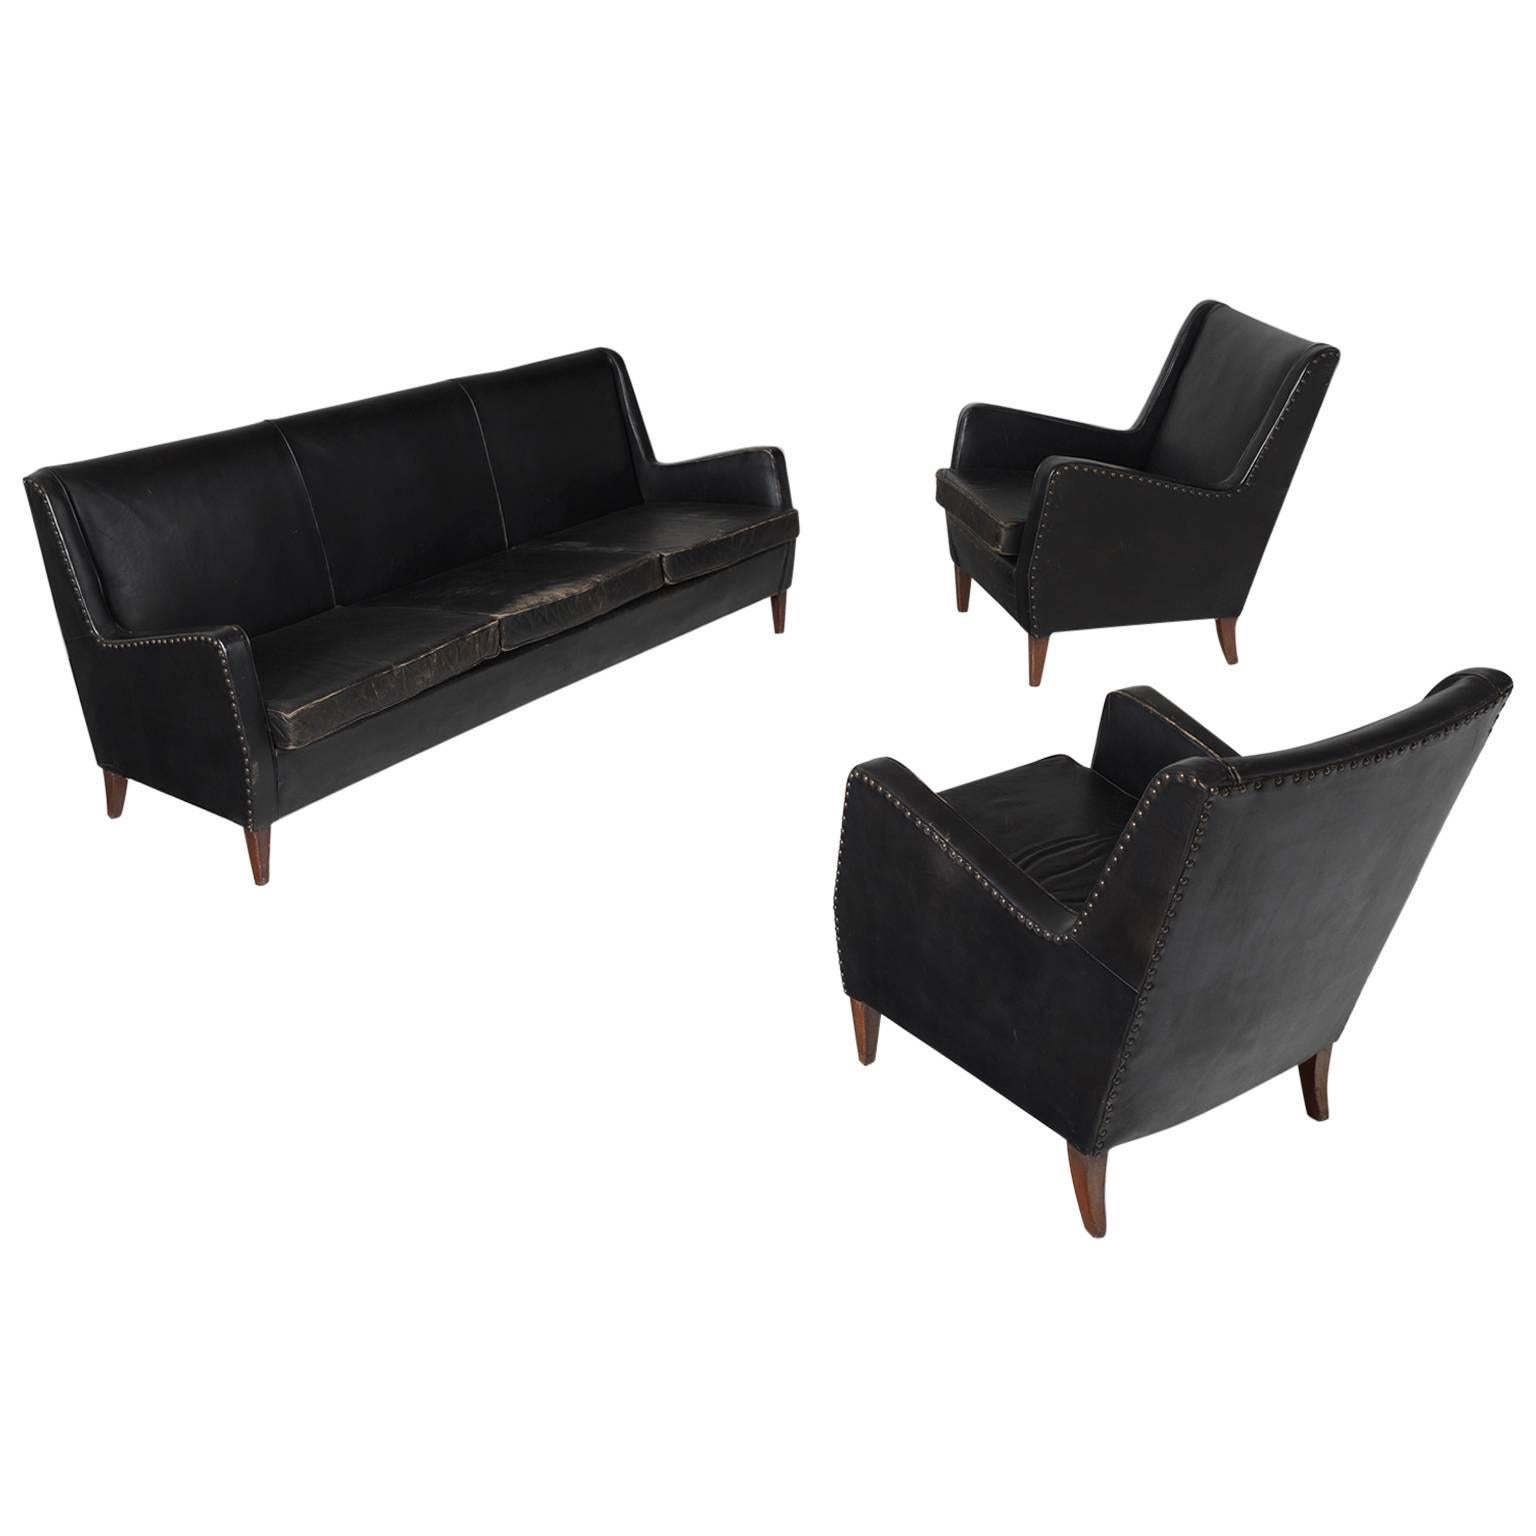 Danish Living-Room Set in Original Black Leather Upholstery